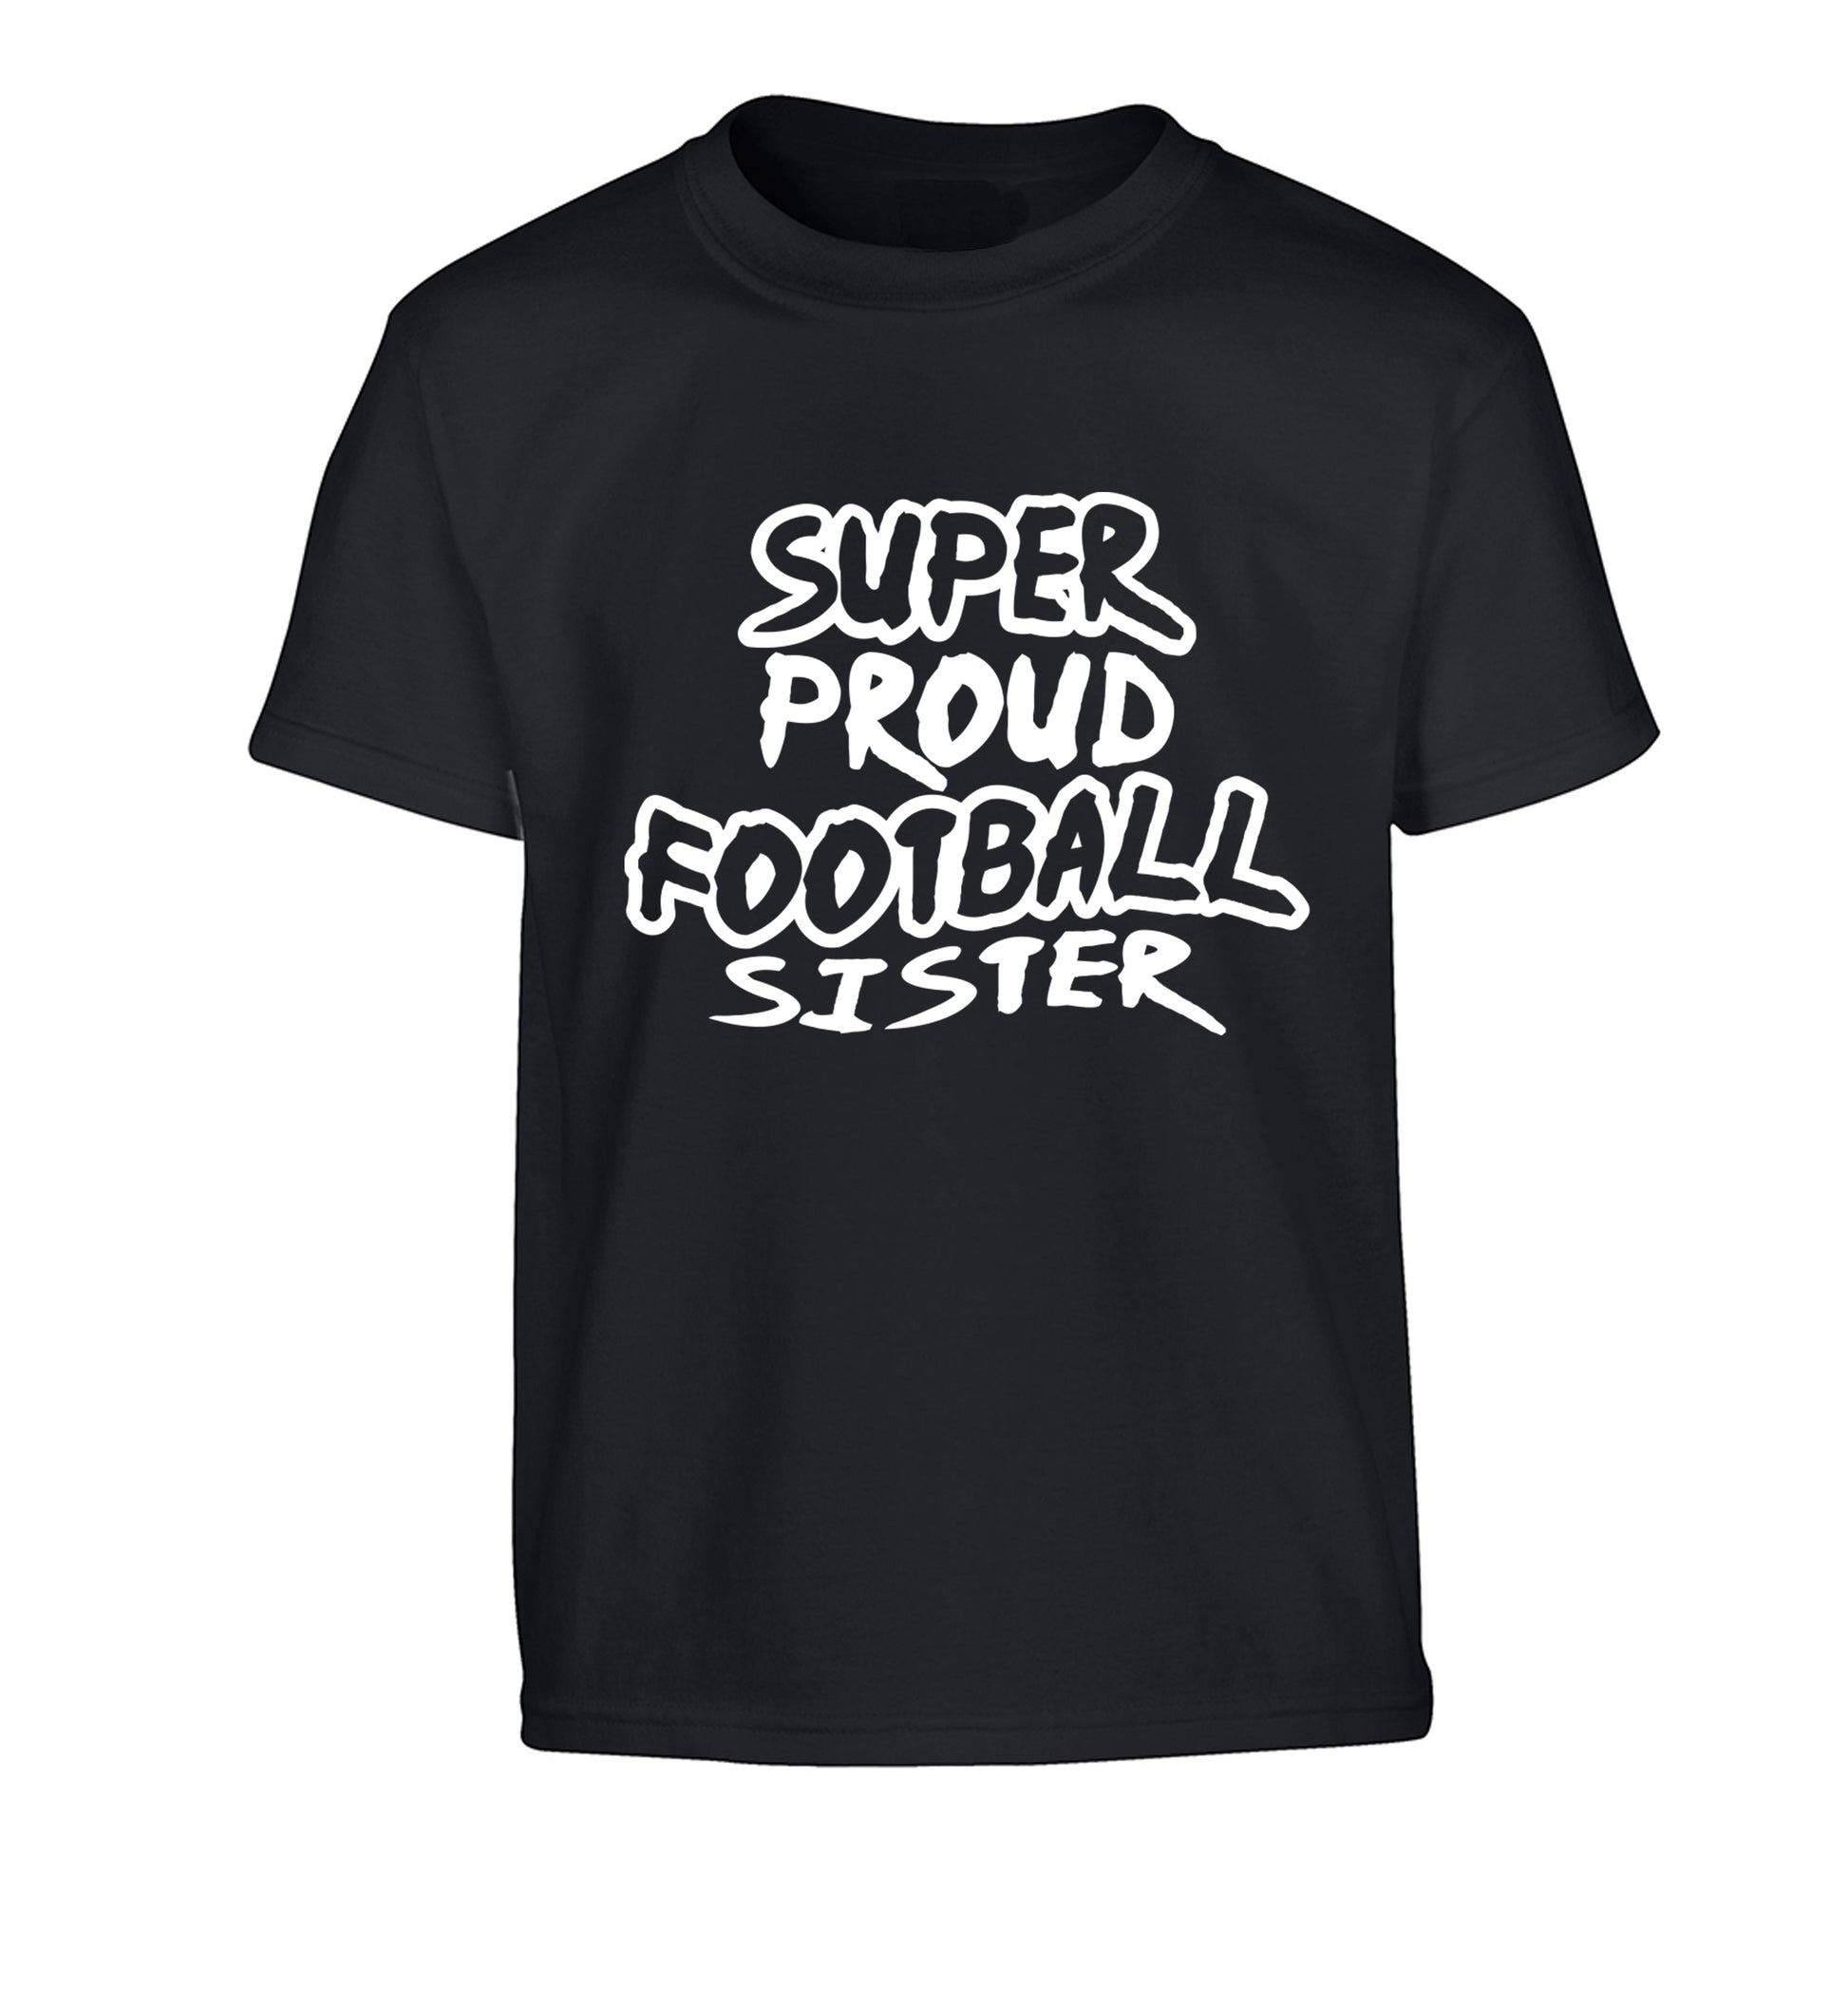 Super proud football sister Children's black Tshirt 12-14 Years